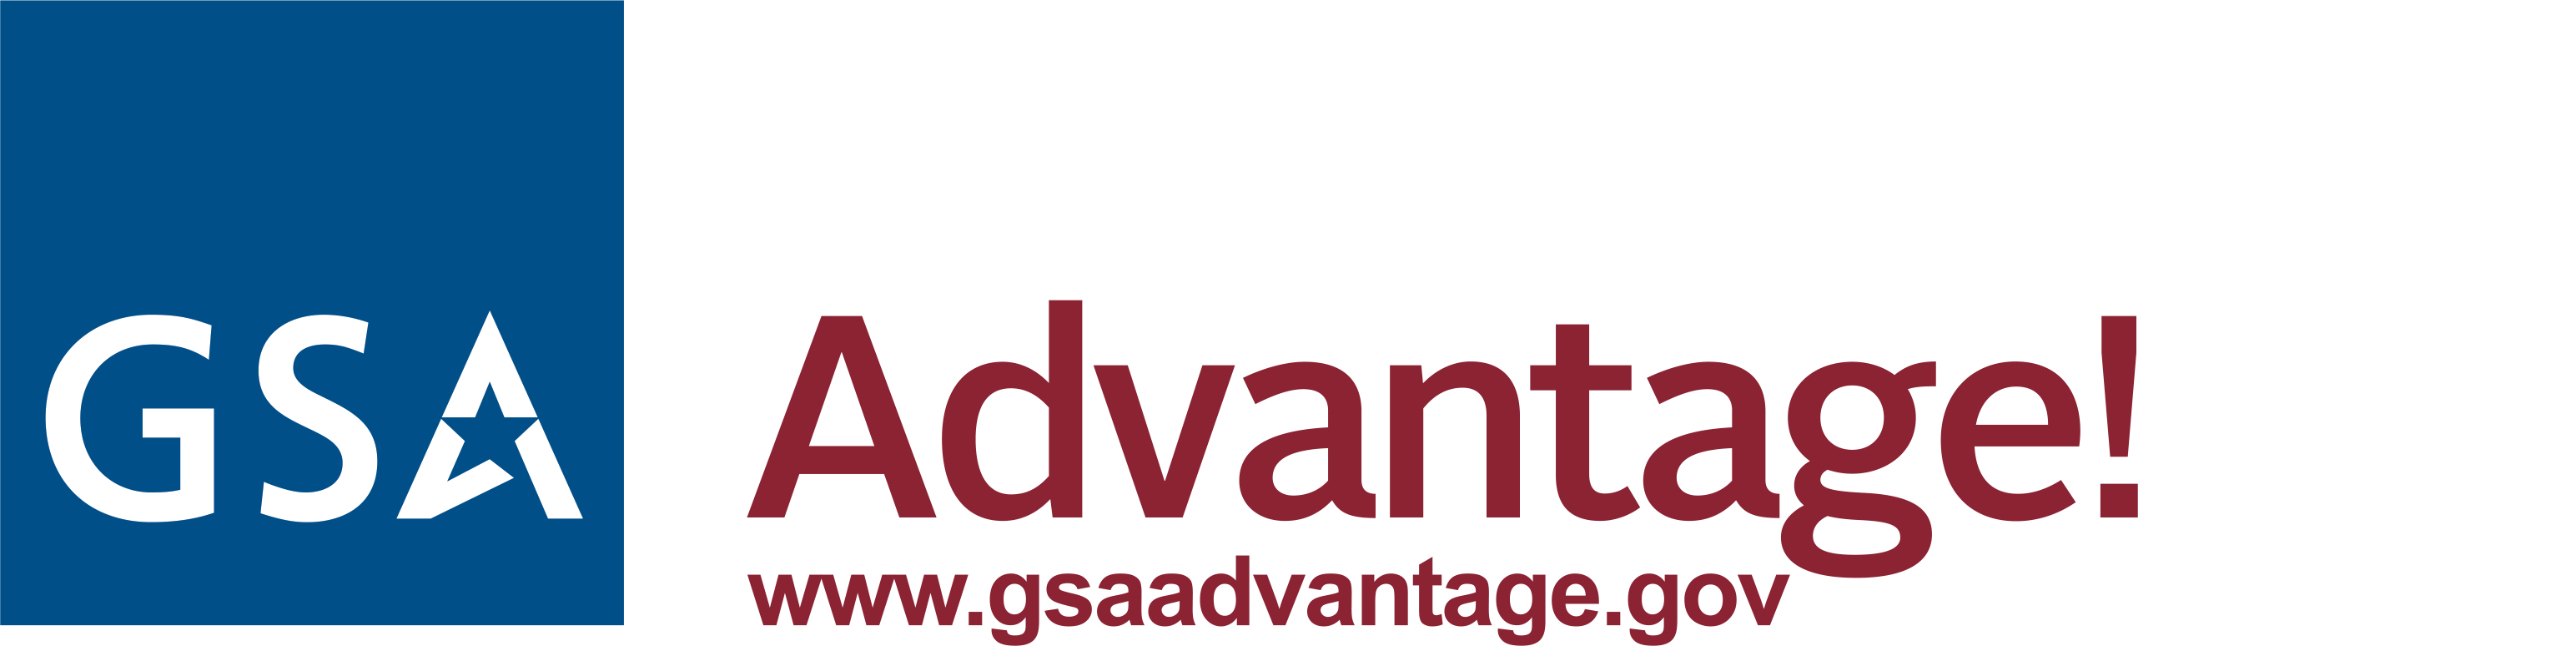 GSA Advantage_Color_and_webaddress_2020